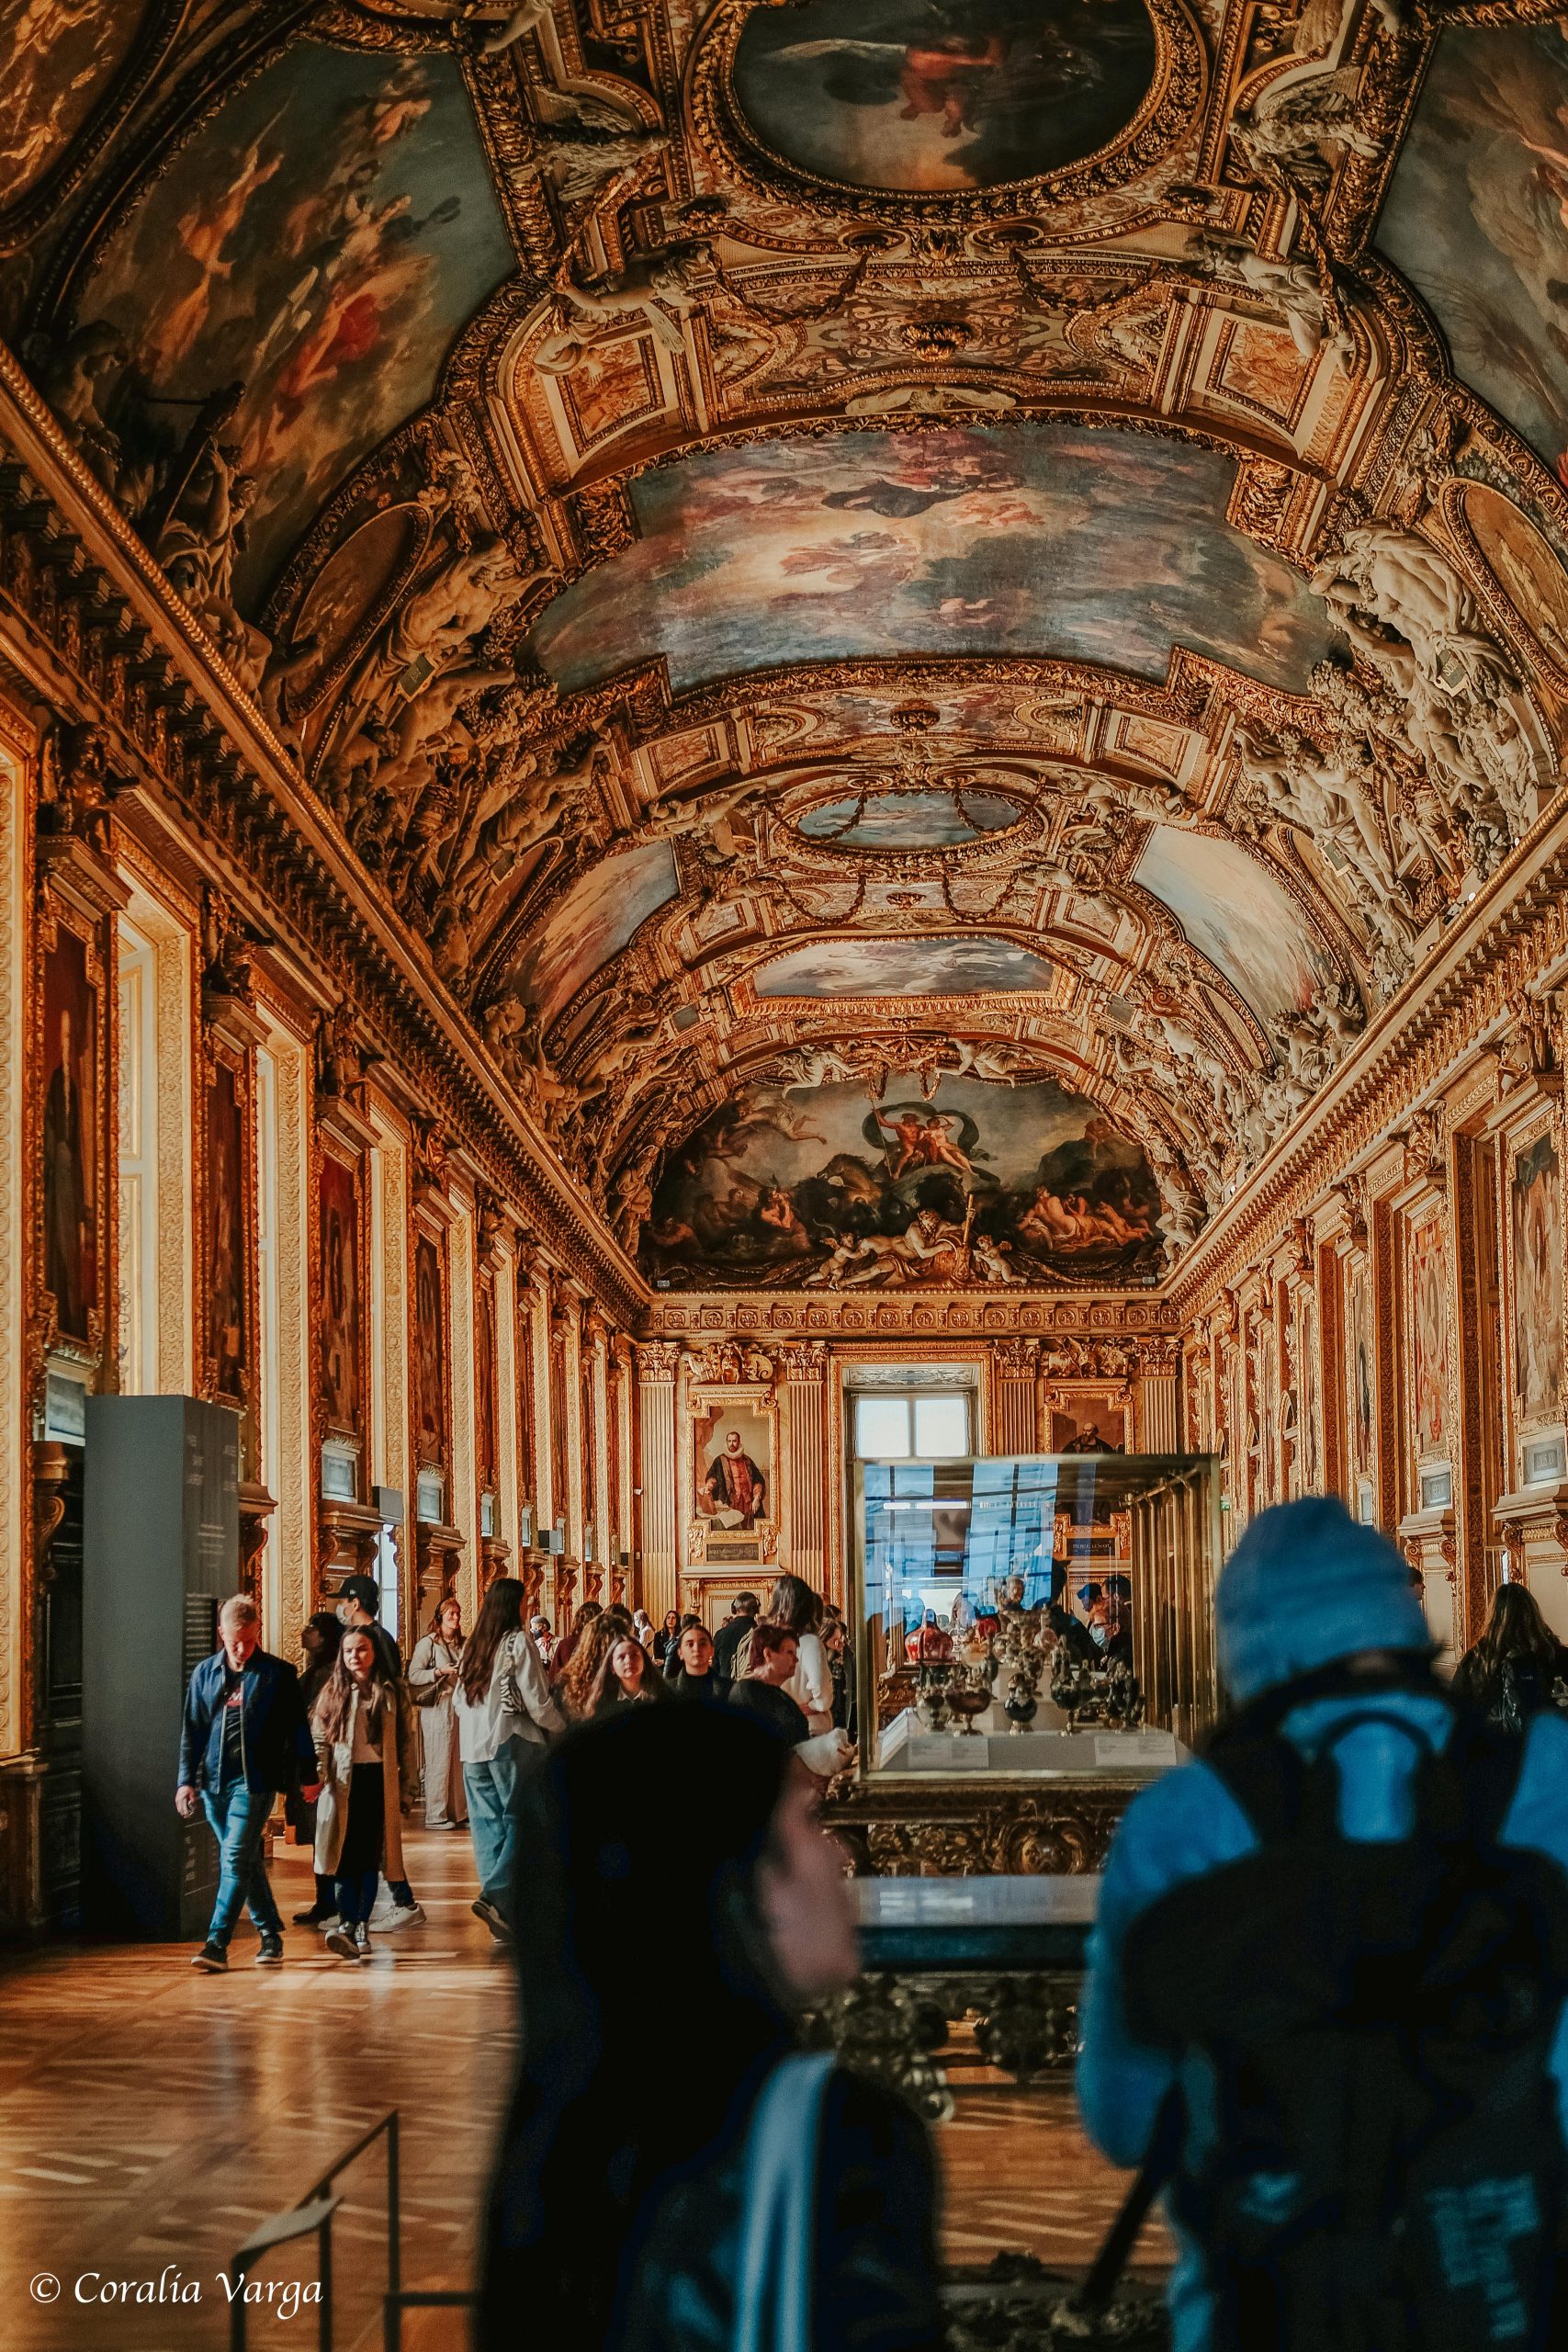 Interior room of Louvre museum